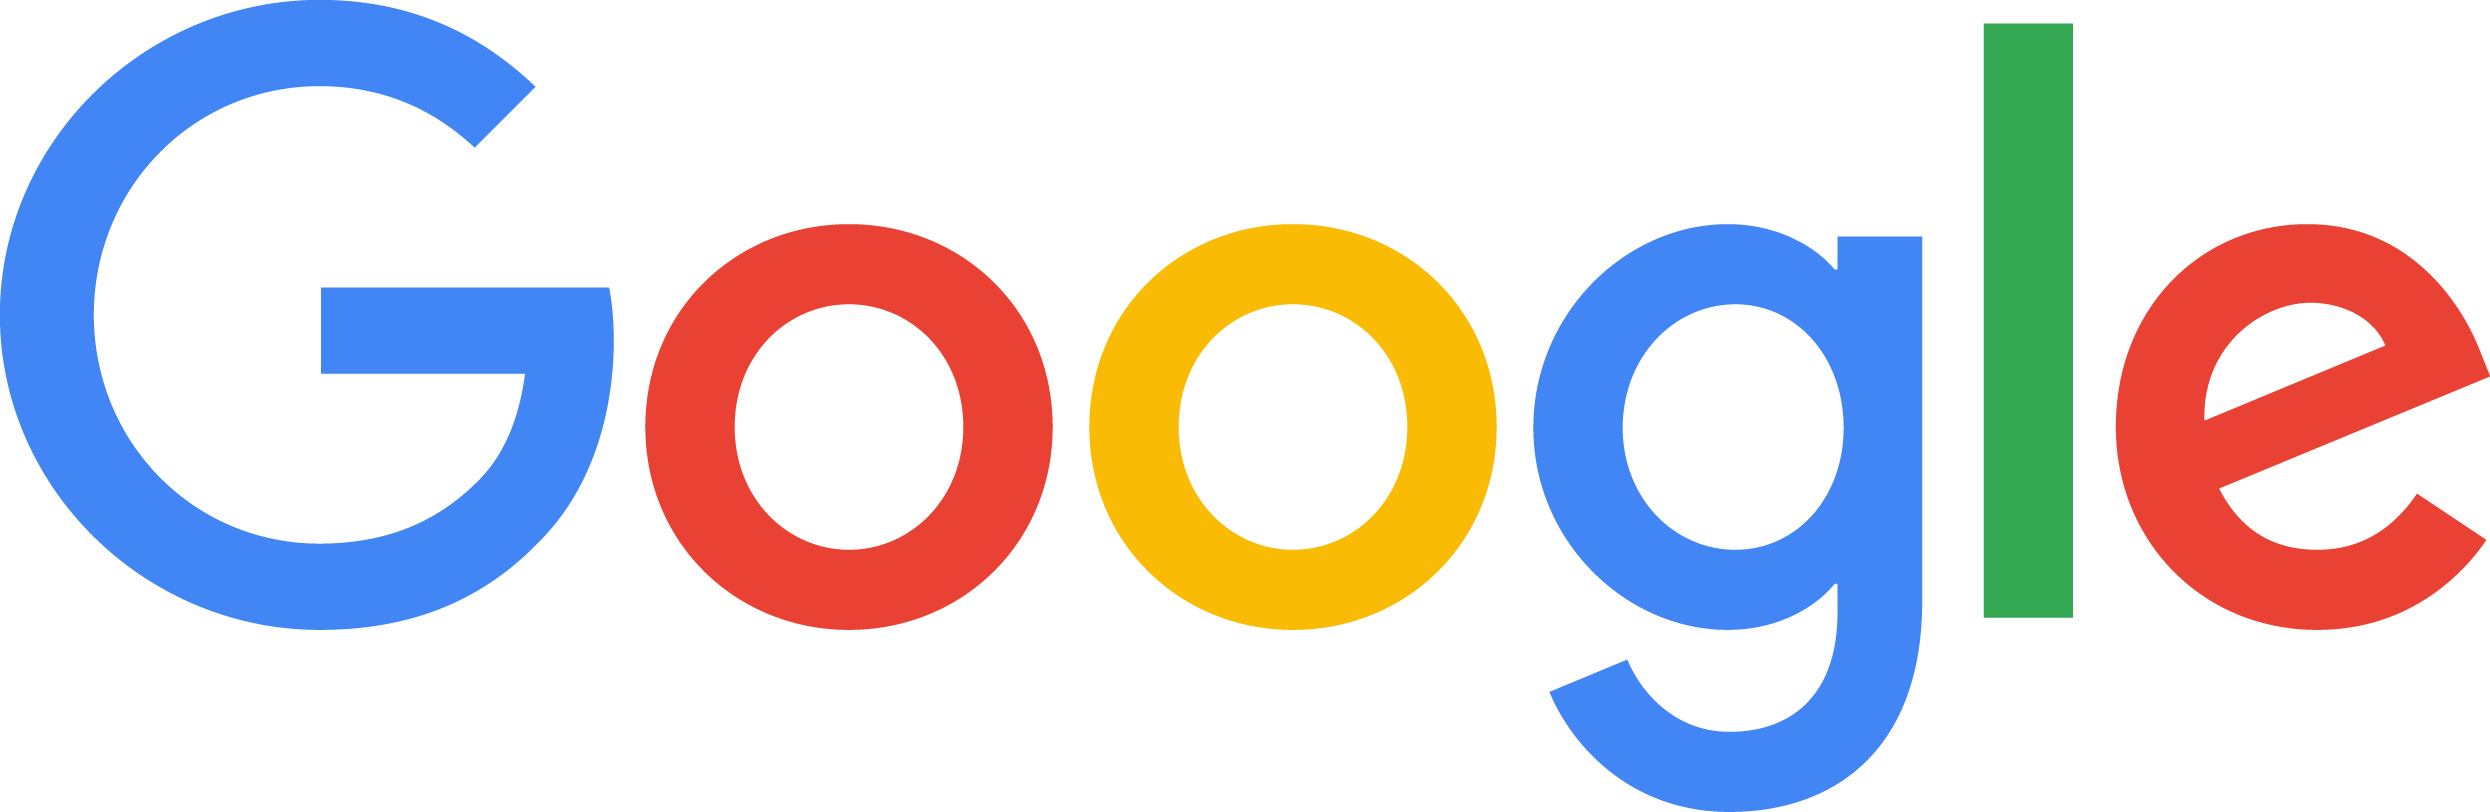 logo_Google_FullColor_3x_830x271px.png